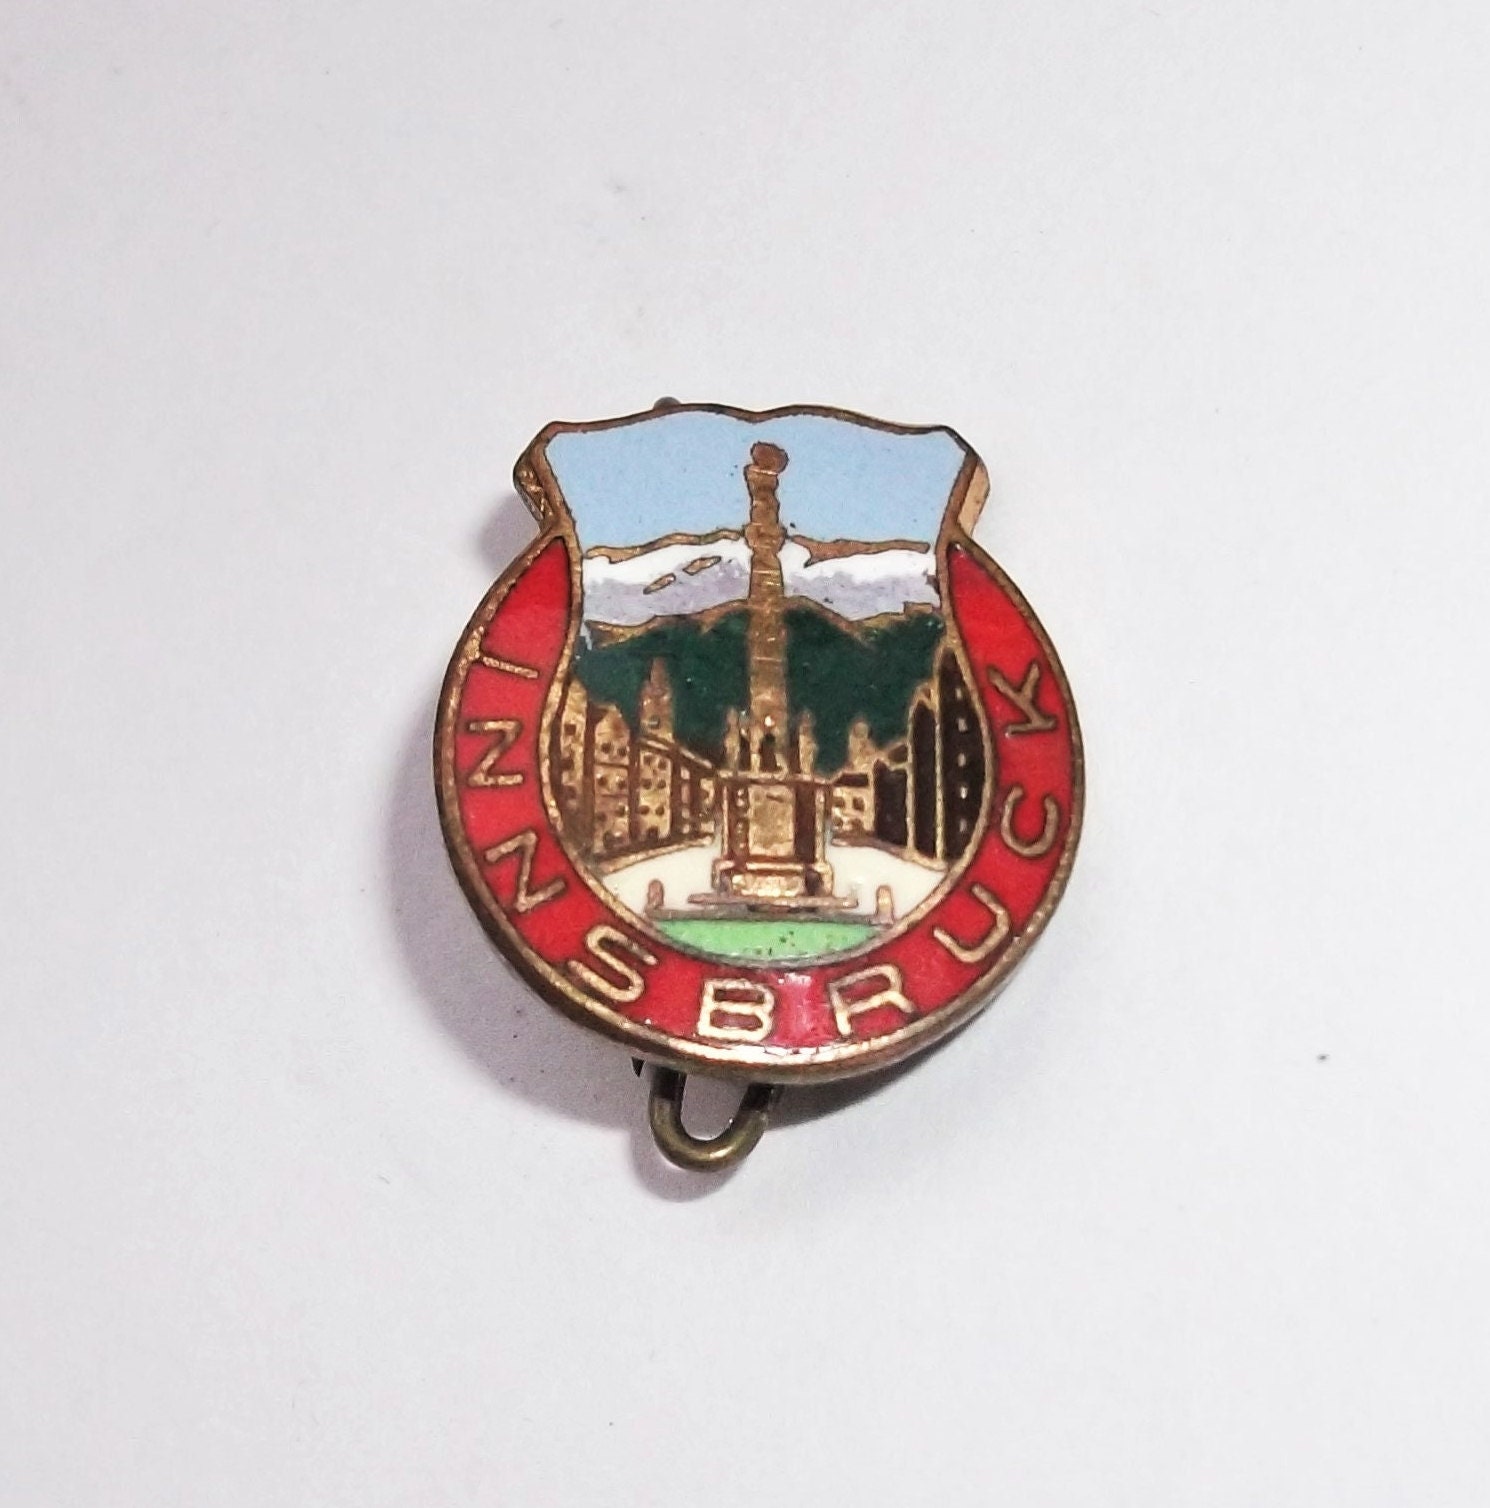 Brooch Metal Patent Shields Pins Badge Vintage